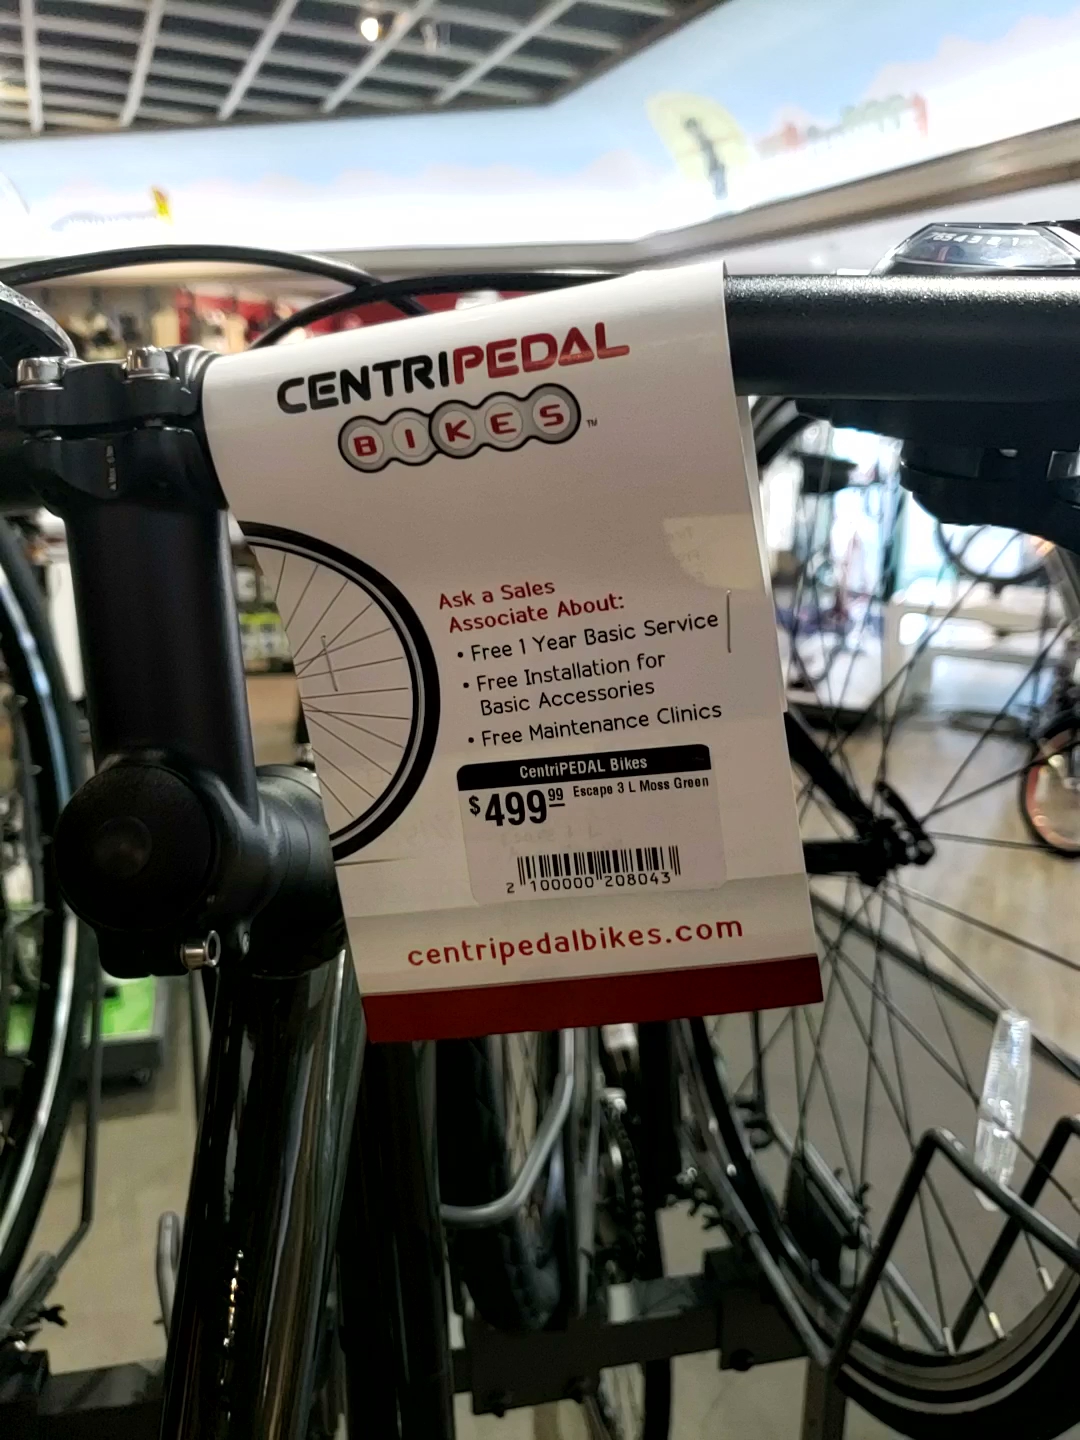 CentriPEDAL Bikes LLC